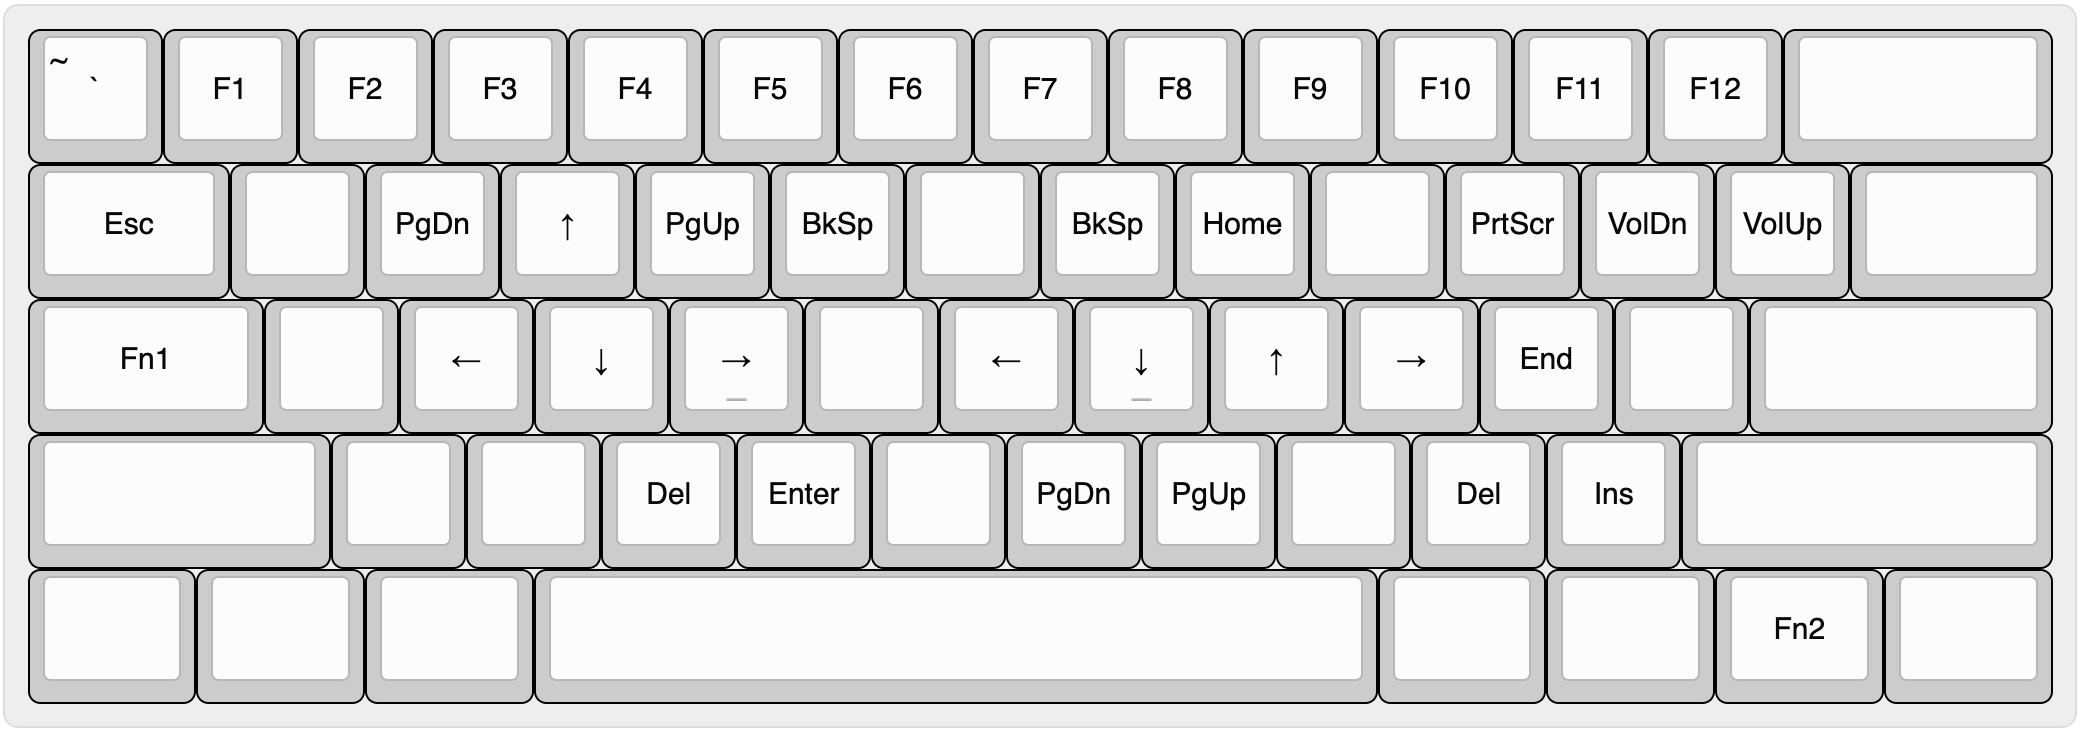 keyboard-layout-anne-pro-2-mac-fn1.png